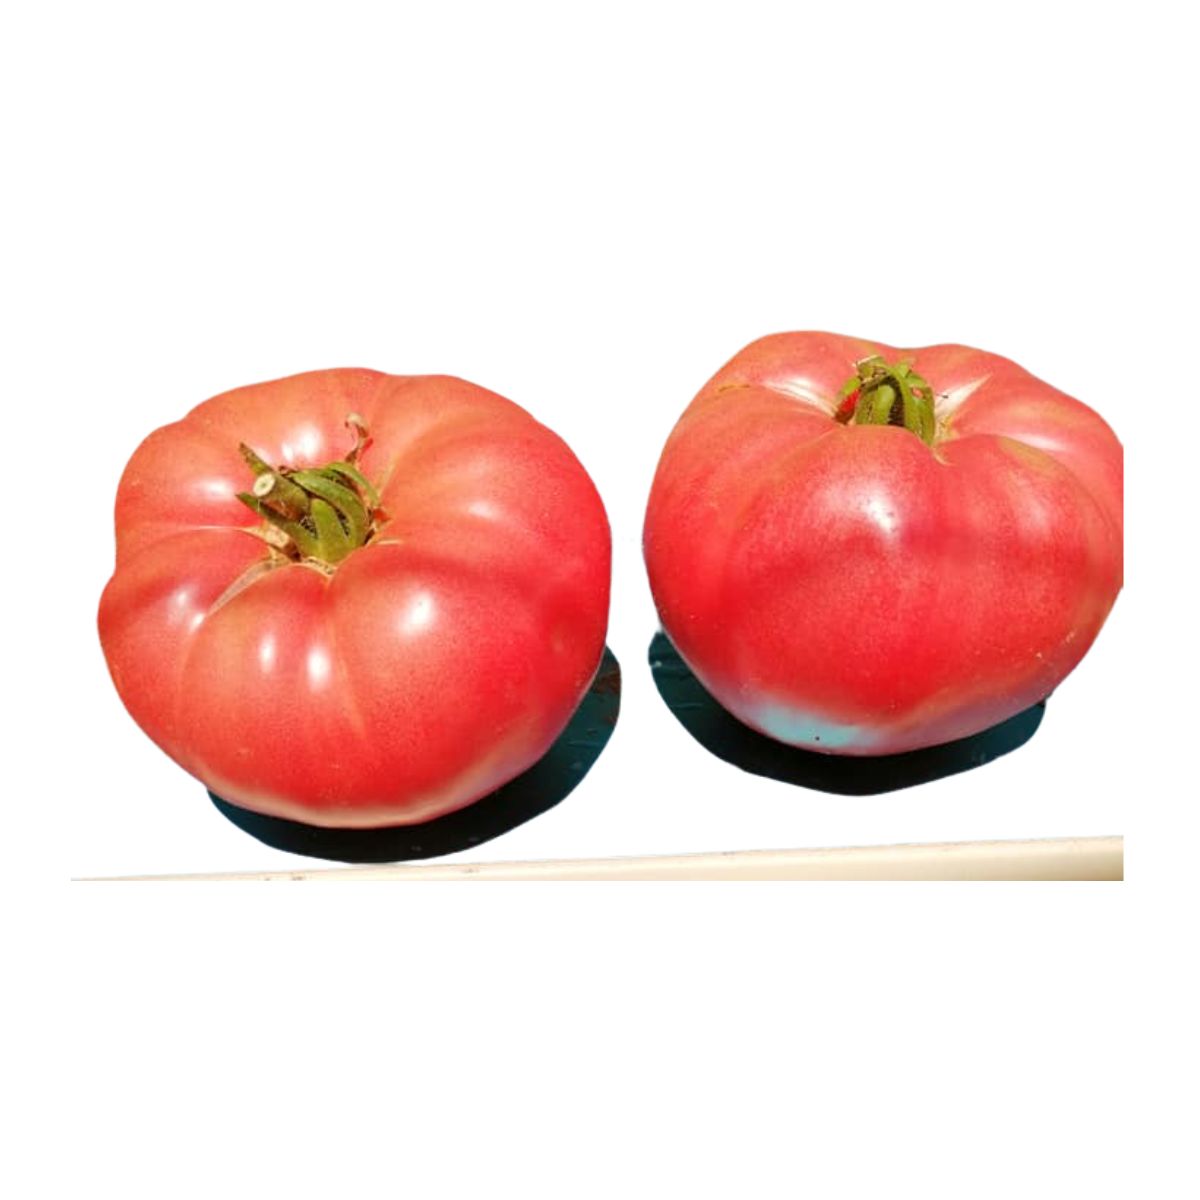 Tomate - Seminte de tomate Rozamax, 0.5 grame FLORIAN, hectarul.ro